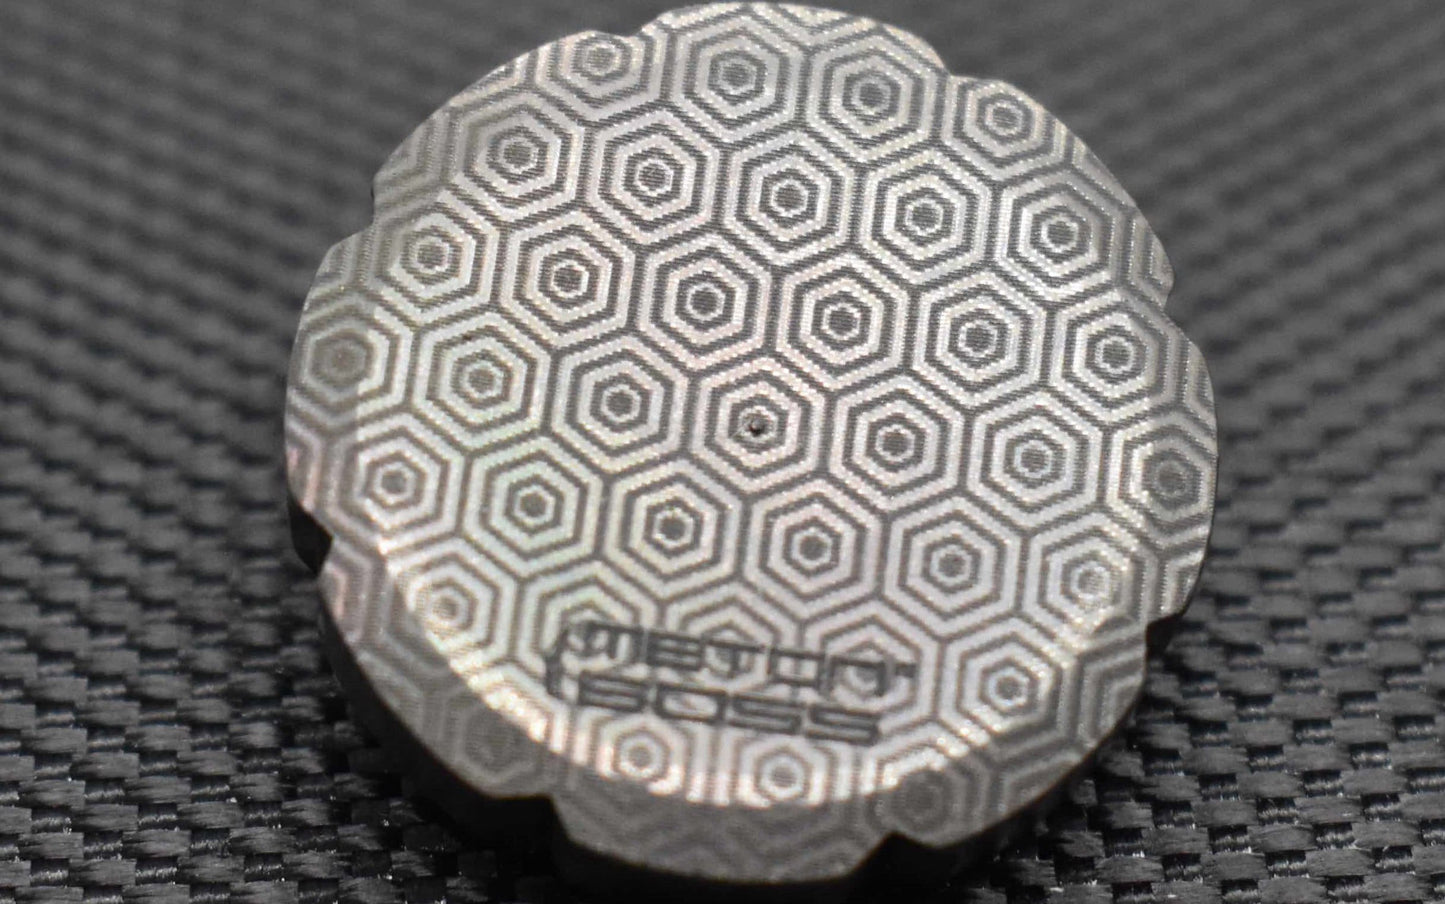 Black Zirconium Spinning Worry Coin Spinning Top